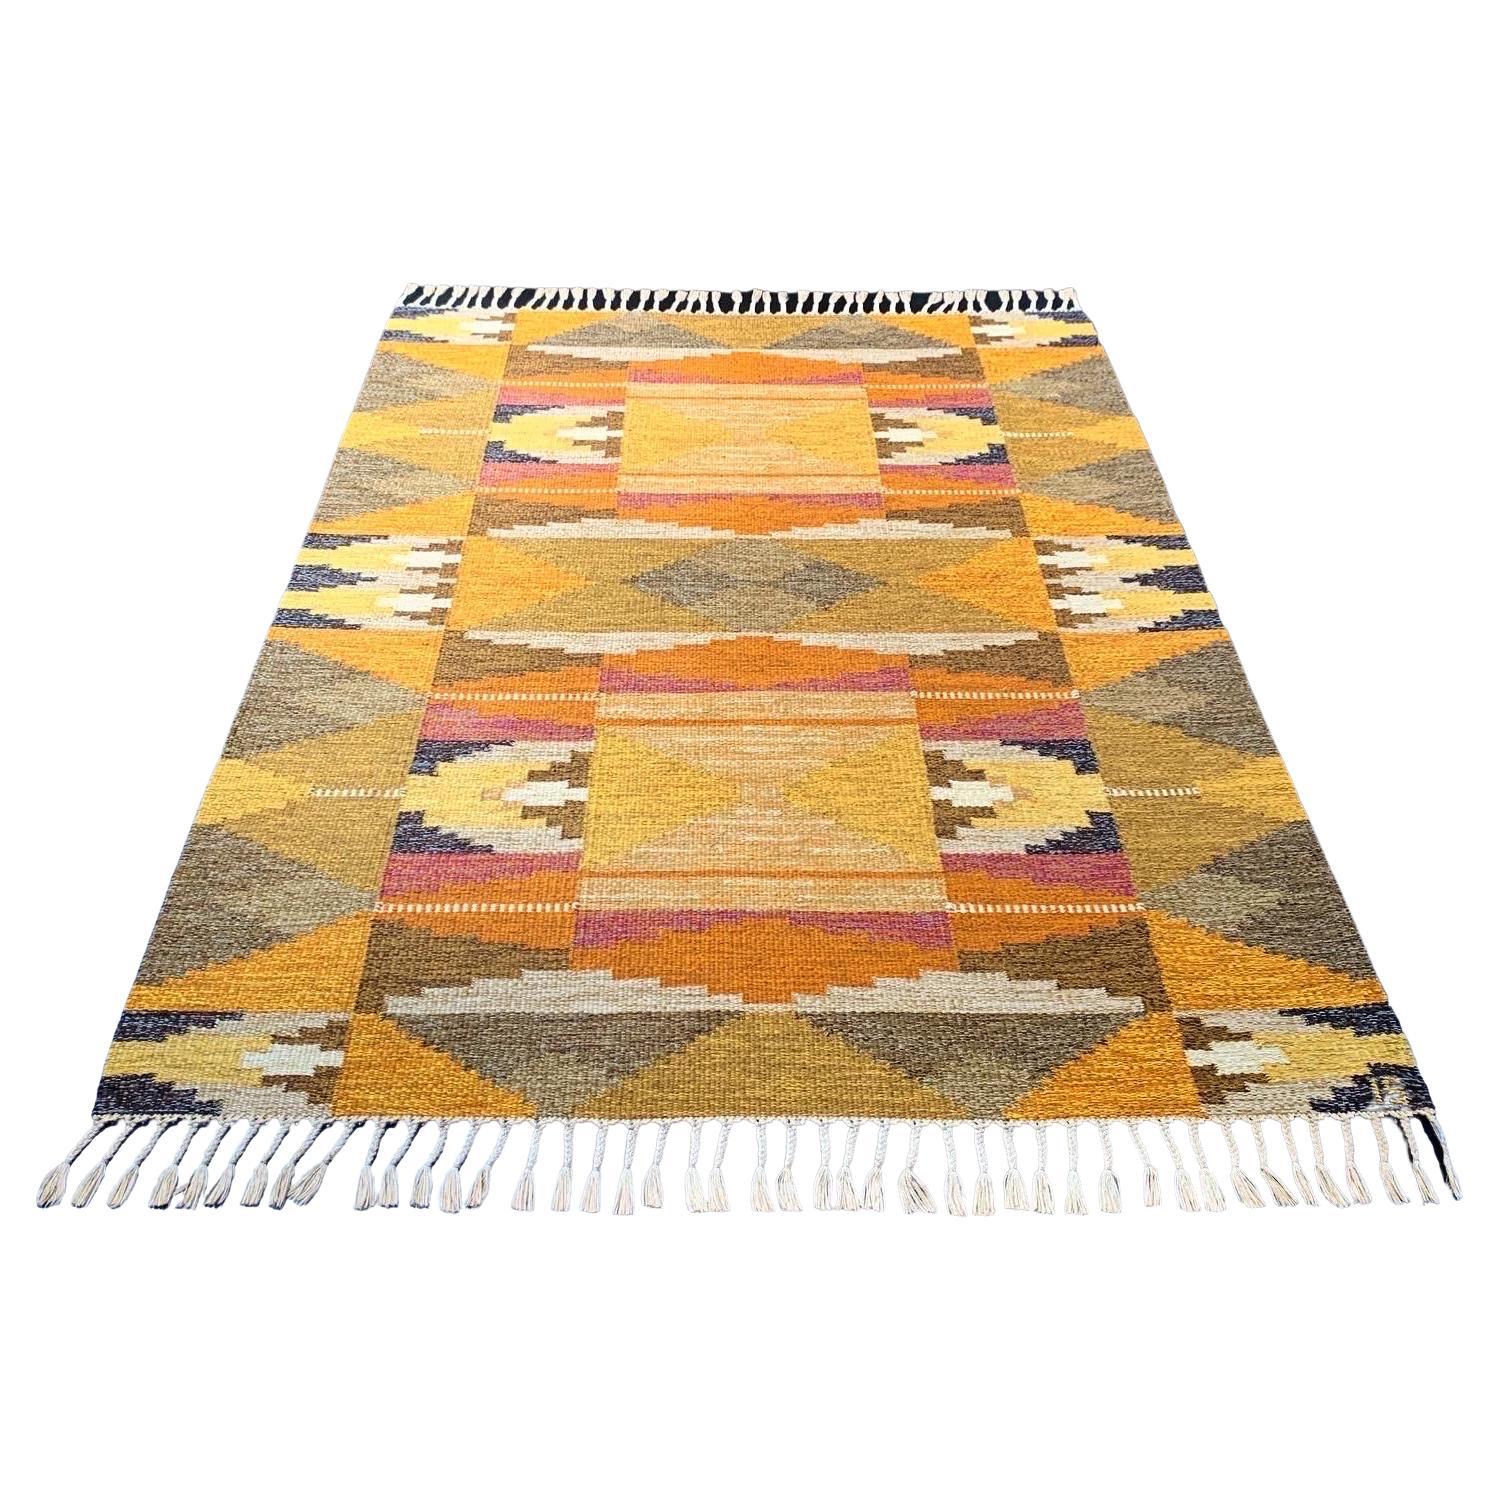 Ingegerd Silow, Swedish Navajo Pattern Wool Rug, Handcrafted, 1950s For Sale